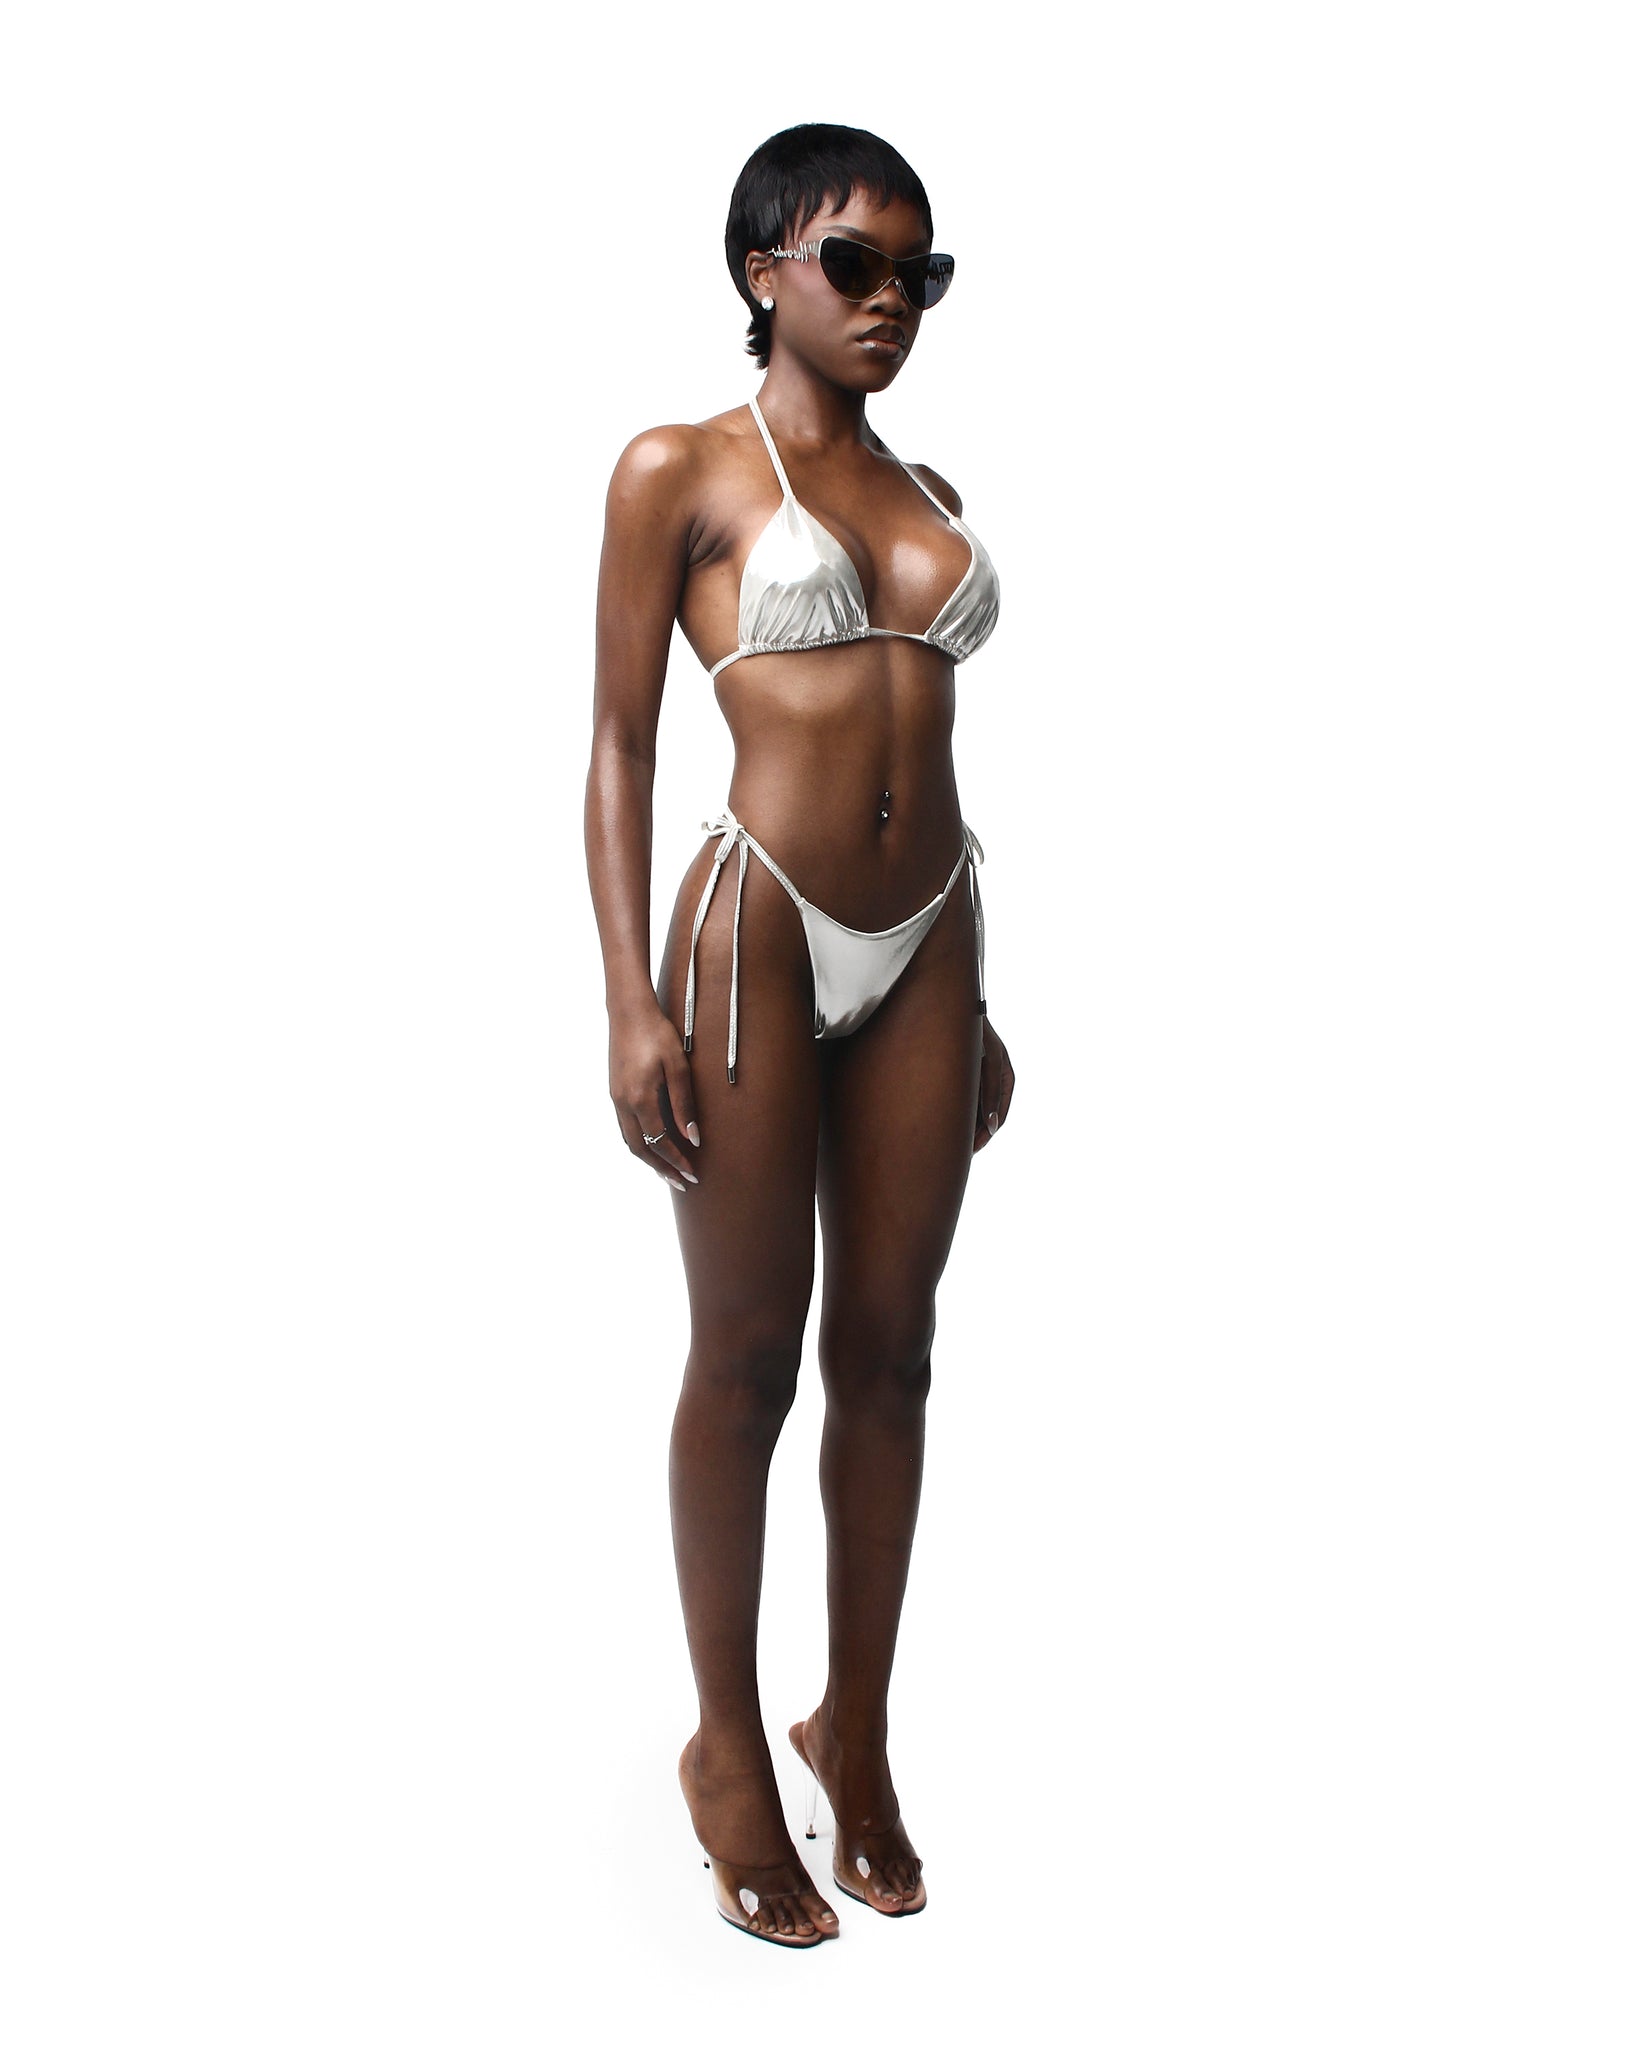 Bikini set, designer style similar to JADEDLDN, front side with metallic bikini top and bottom, Horvadi logo metallic sunglasses included.